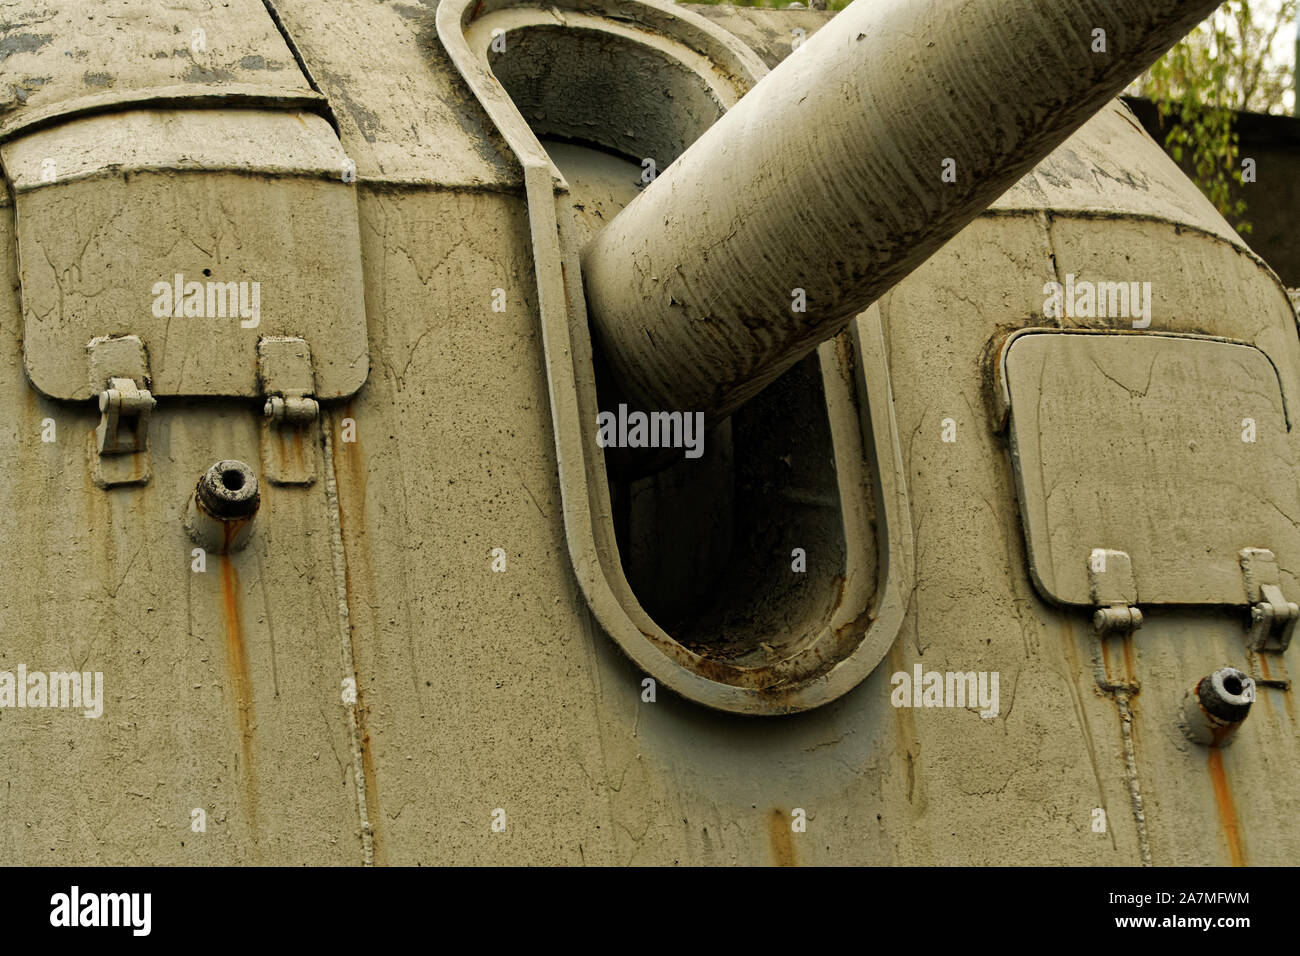 Schwerer gustav gun hi-res stock photography and images - Alamy